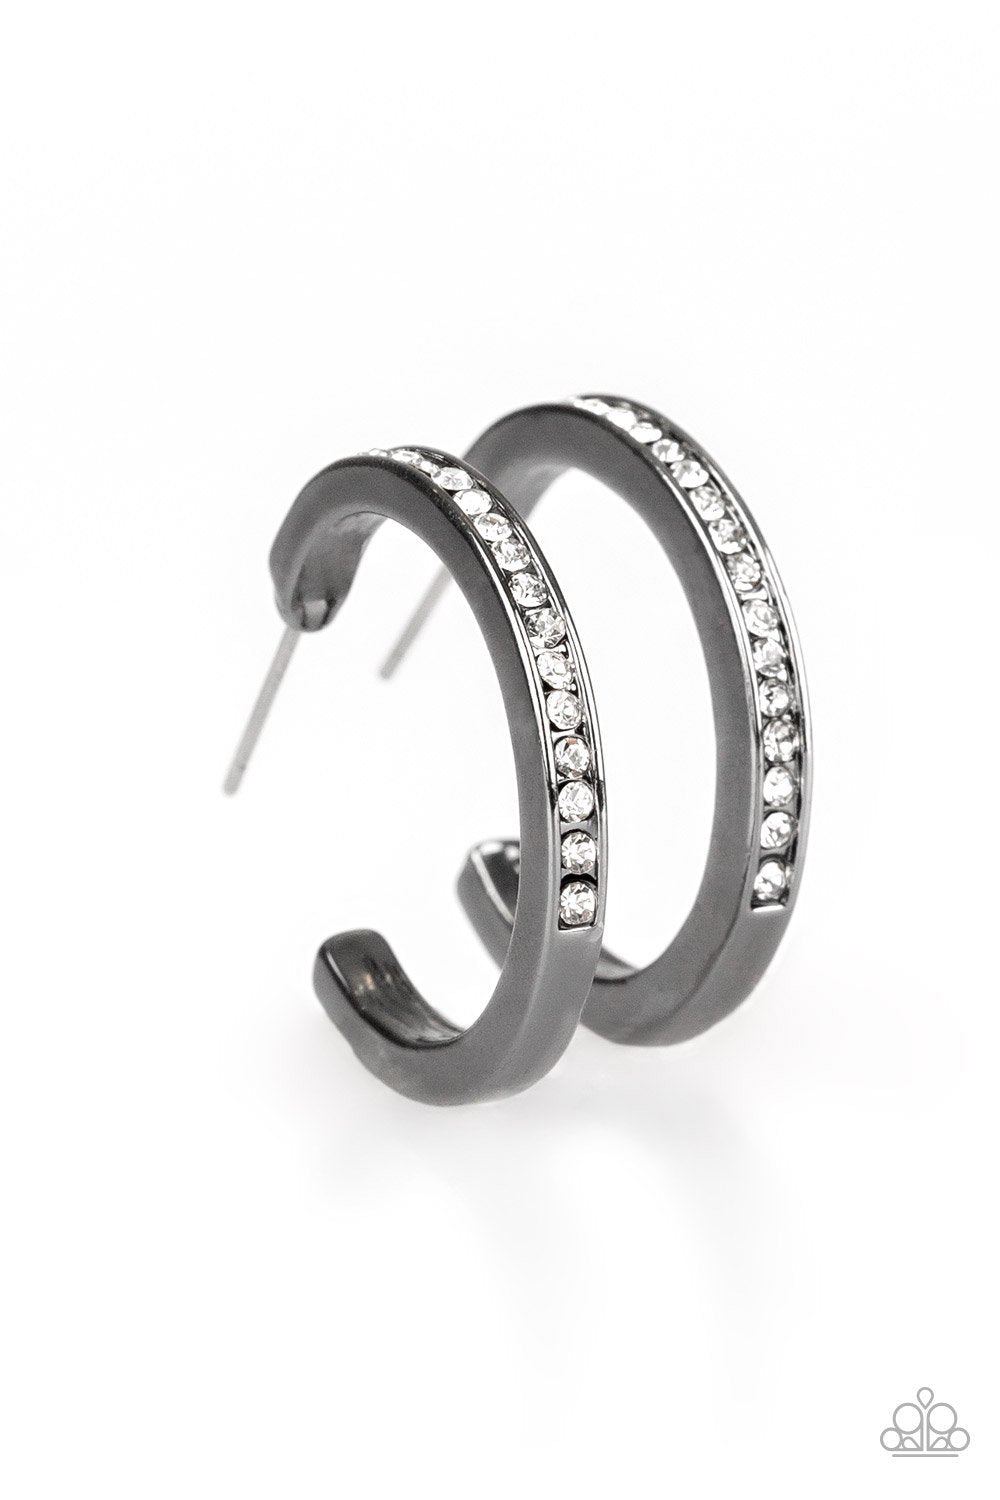 Hoop Haven Gunmetal Black Hoop Earrings - Paparazzi Accessories-CarasShop.com - $5 Jewelry by Cara Jewels